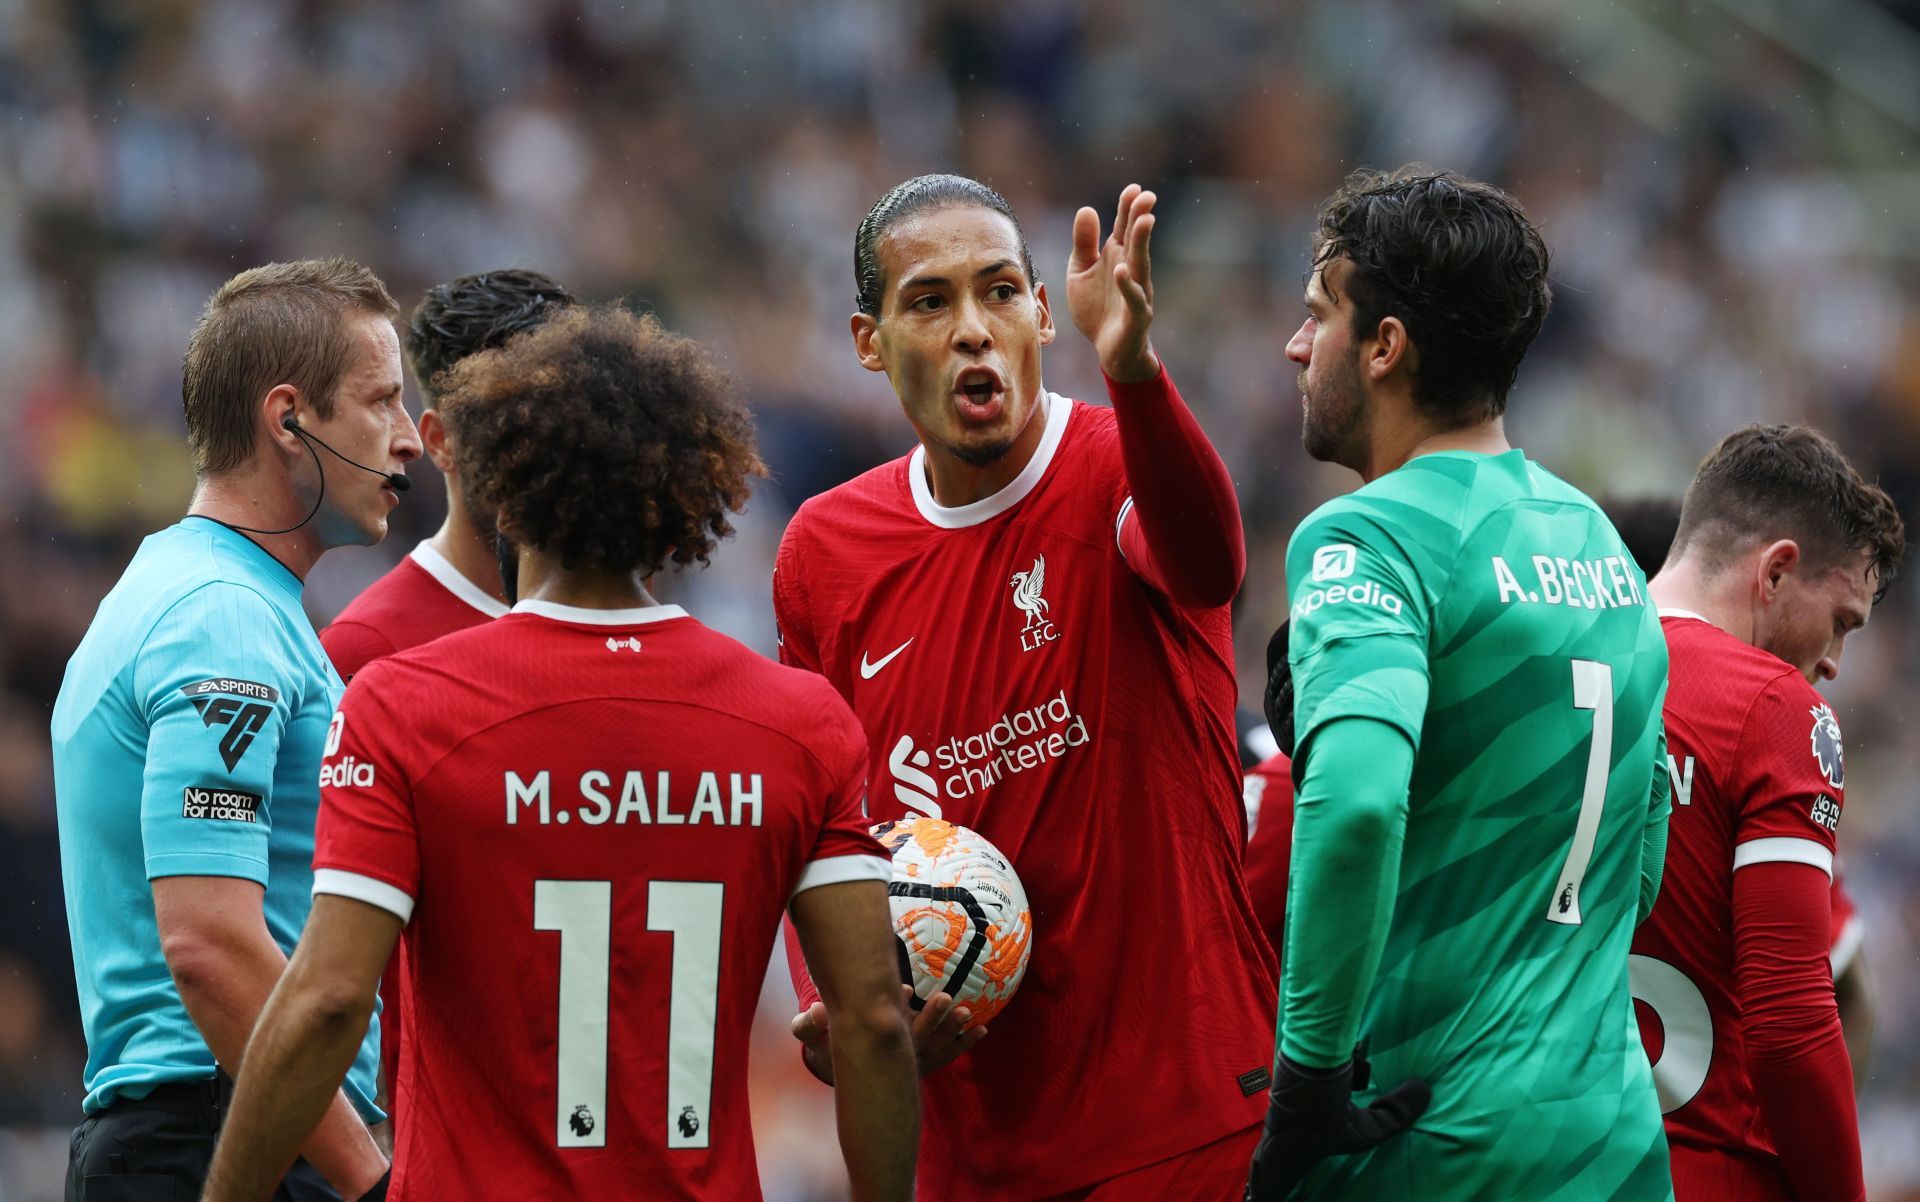 Liverpool captain Van Dijk saw red against Newcastle.